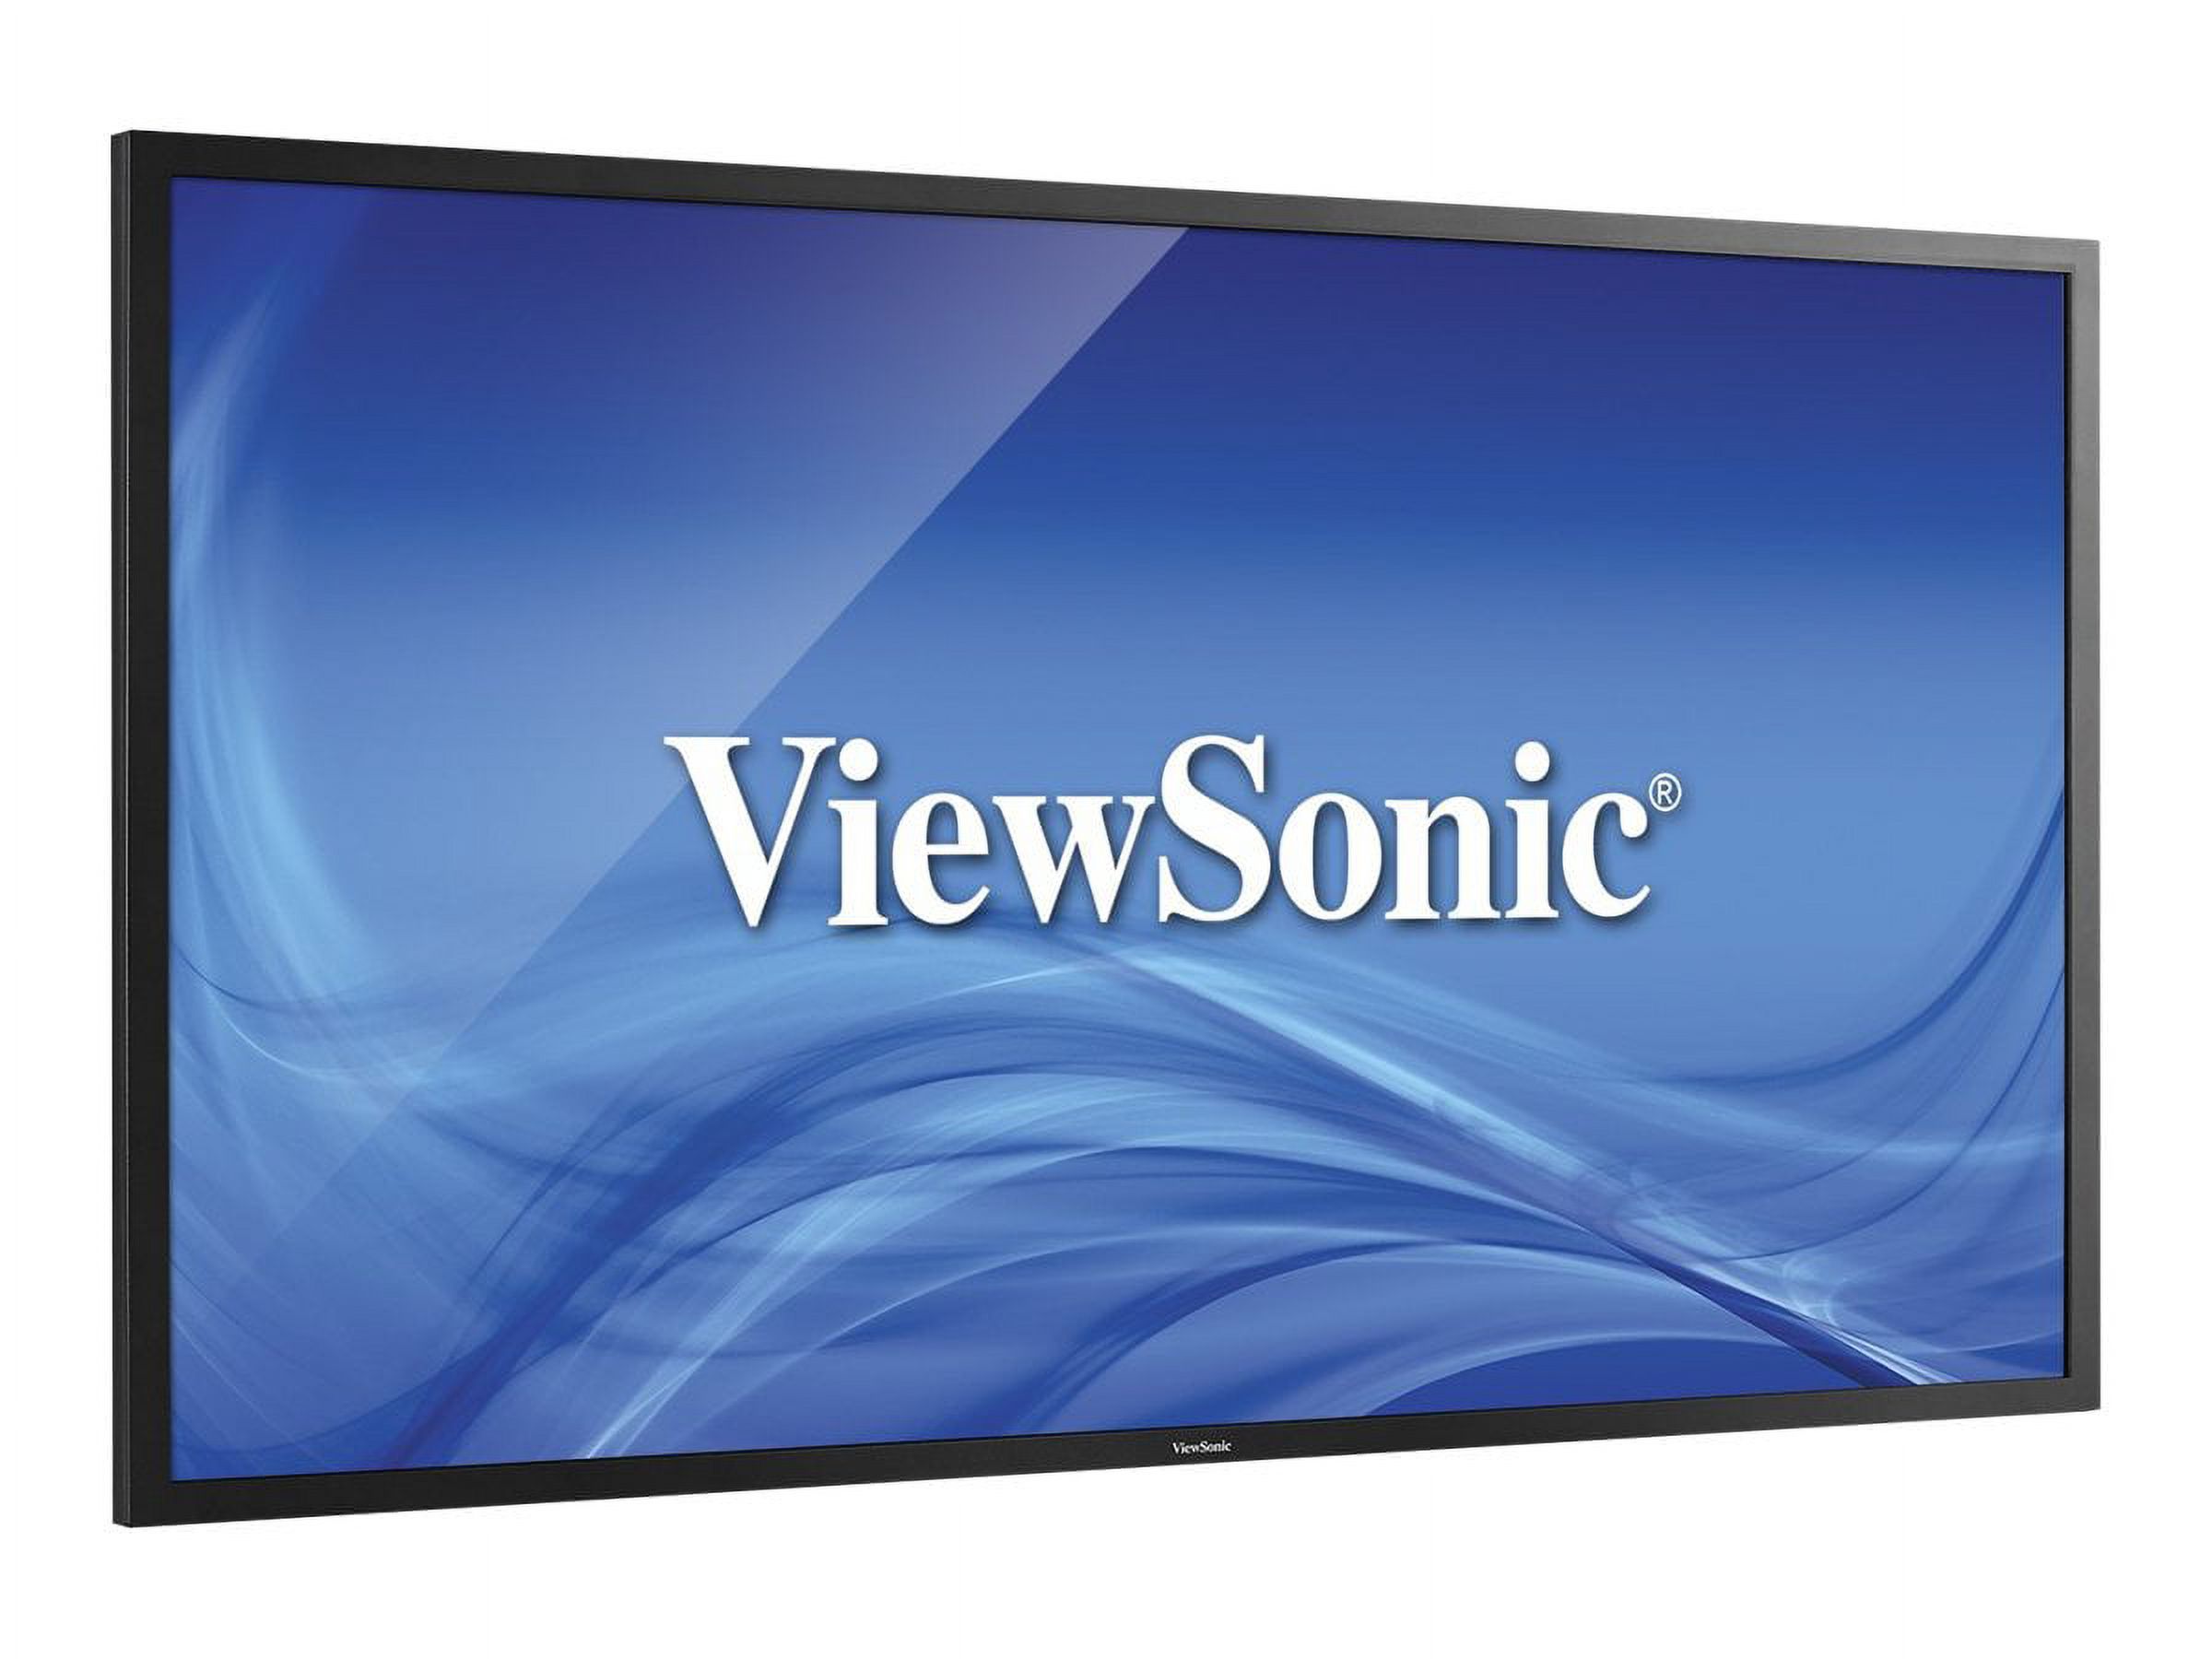 ViewSonic CDP5560-L 55" LED display - - image 3 of 9